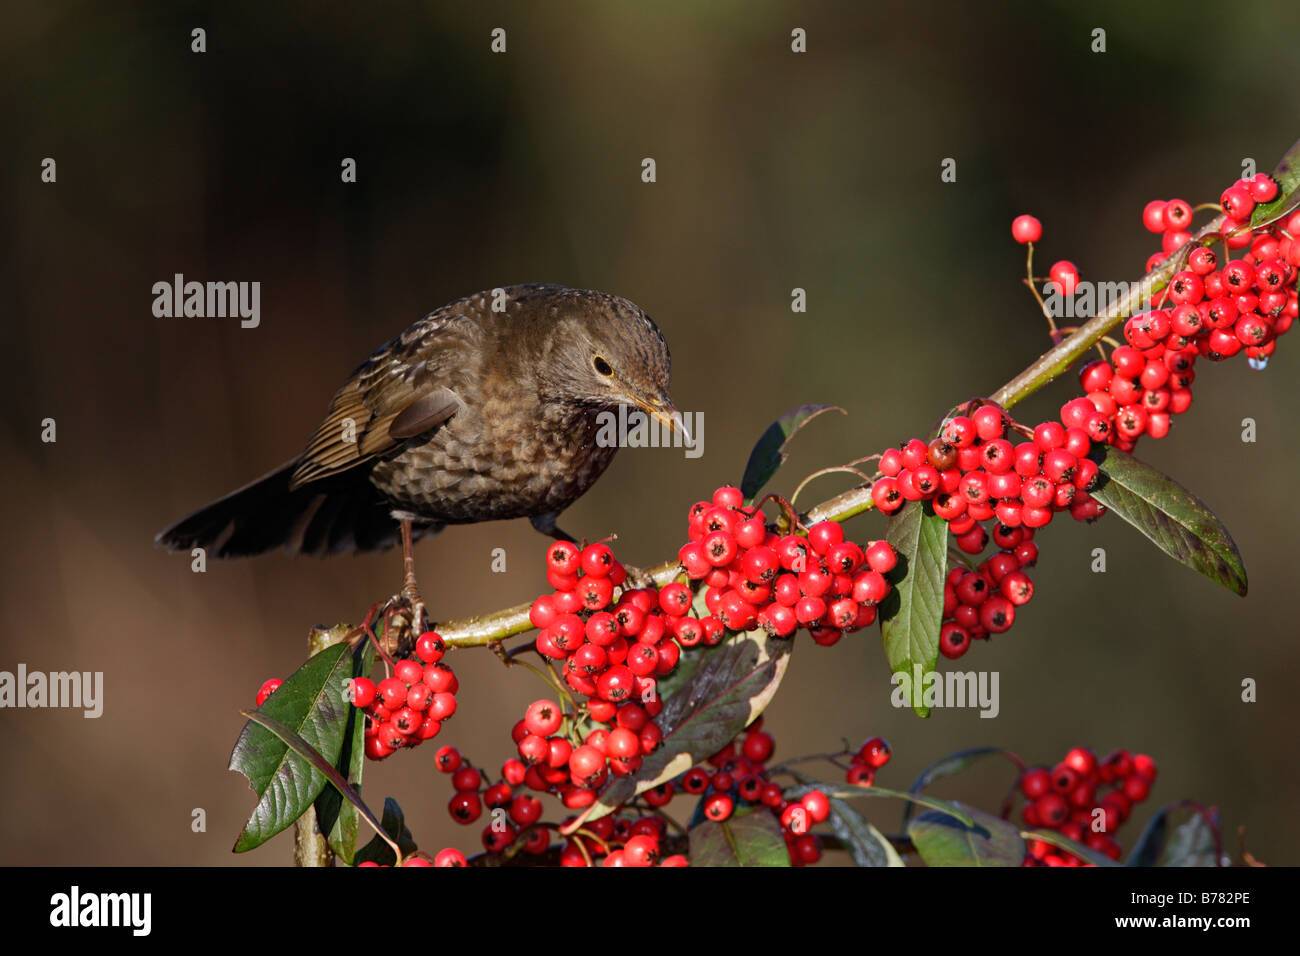 Blackbird Turdus merula on berries Stock Photo